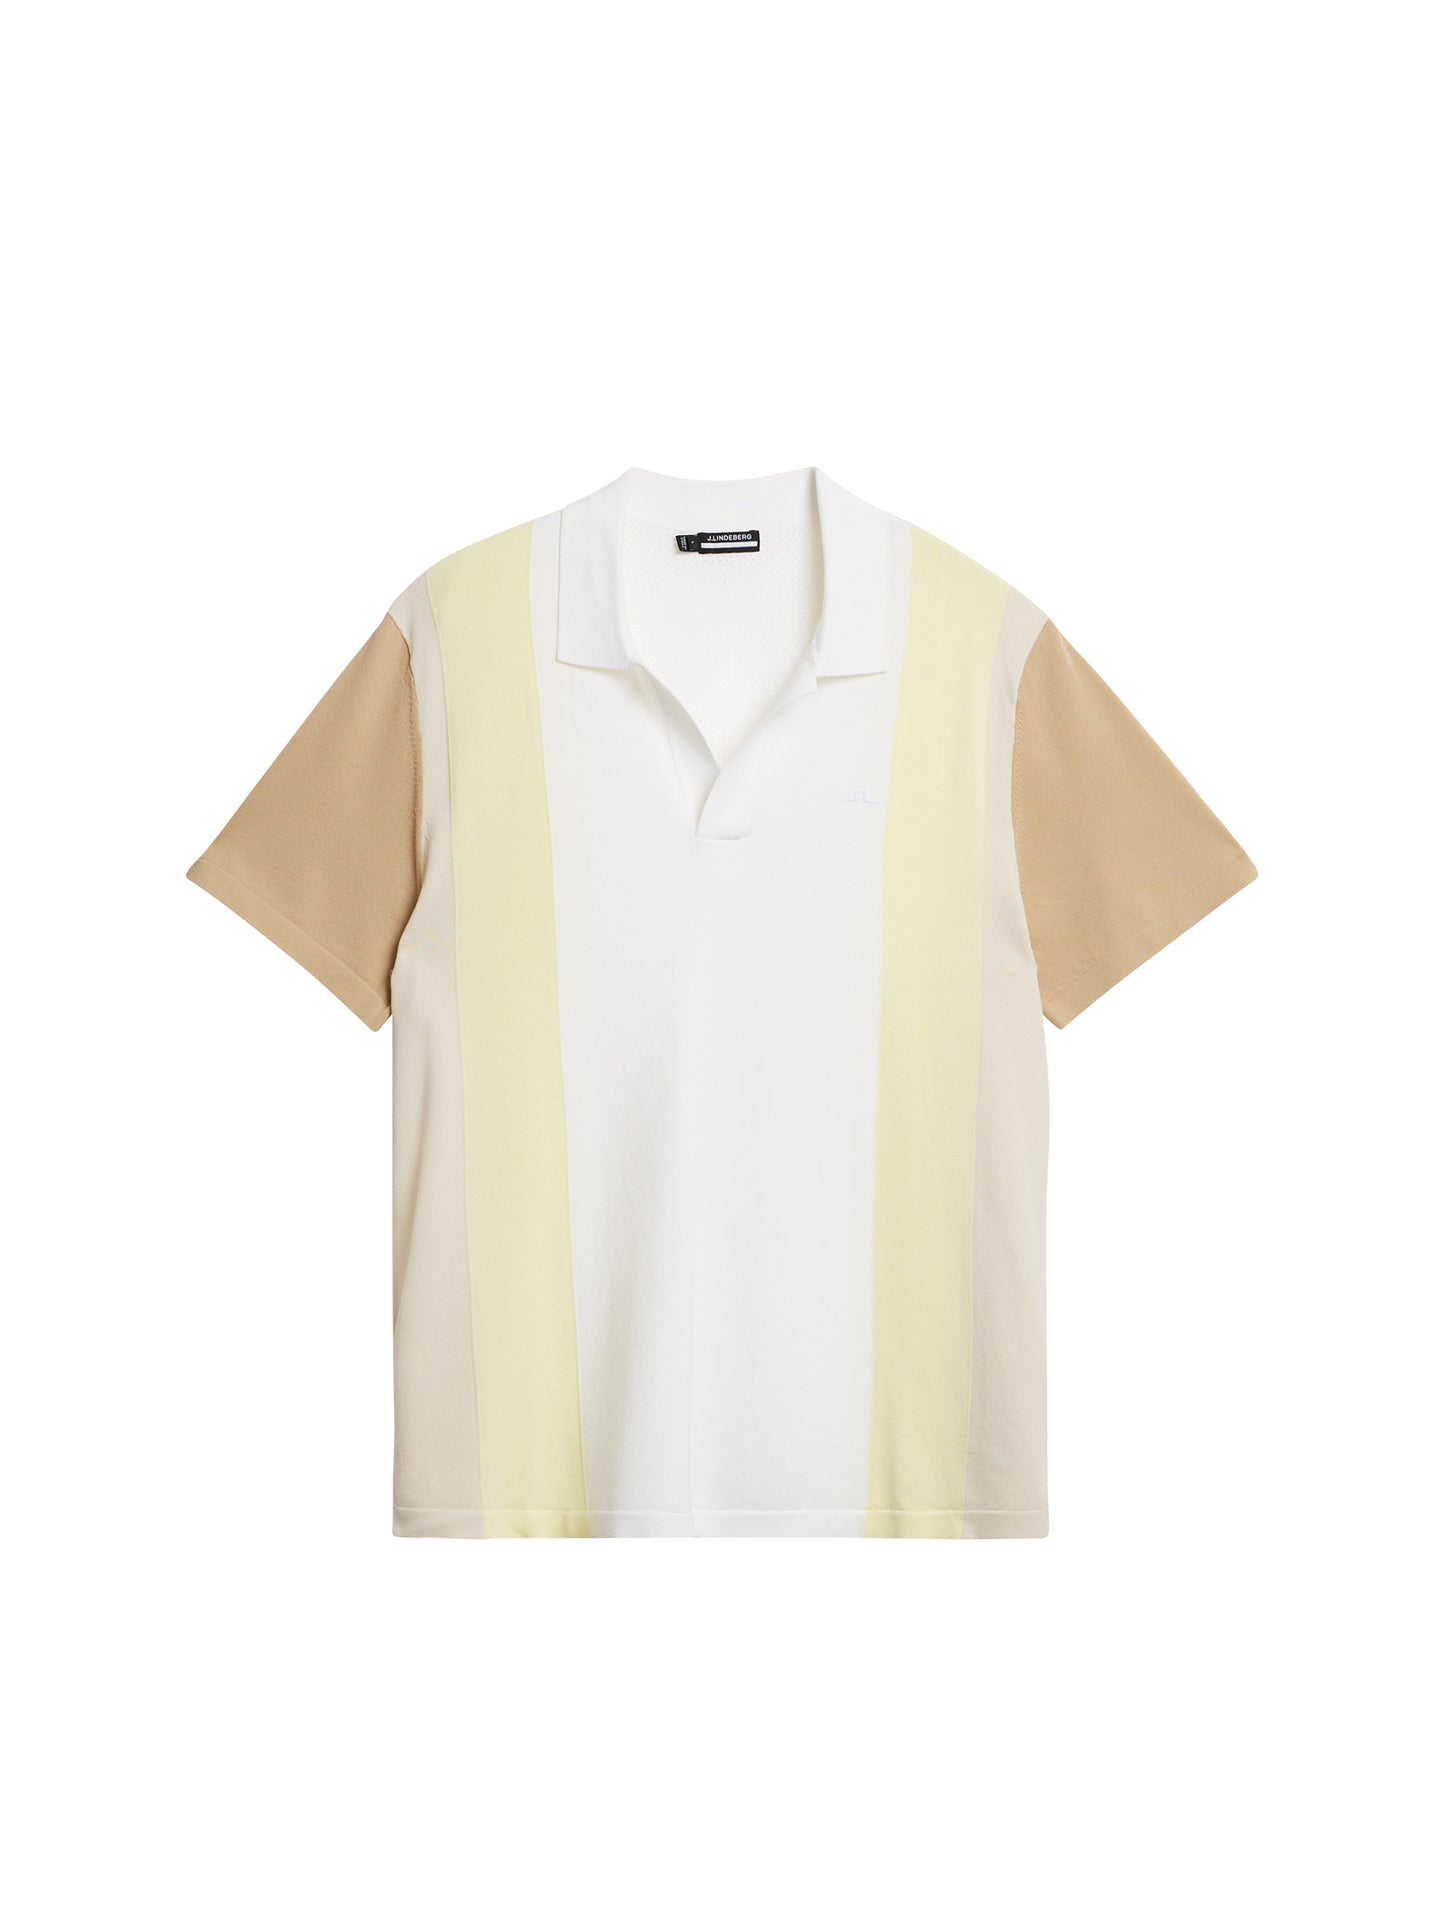 Learco Knitted Shirt / Safari Beige